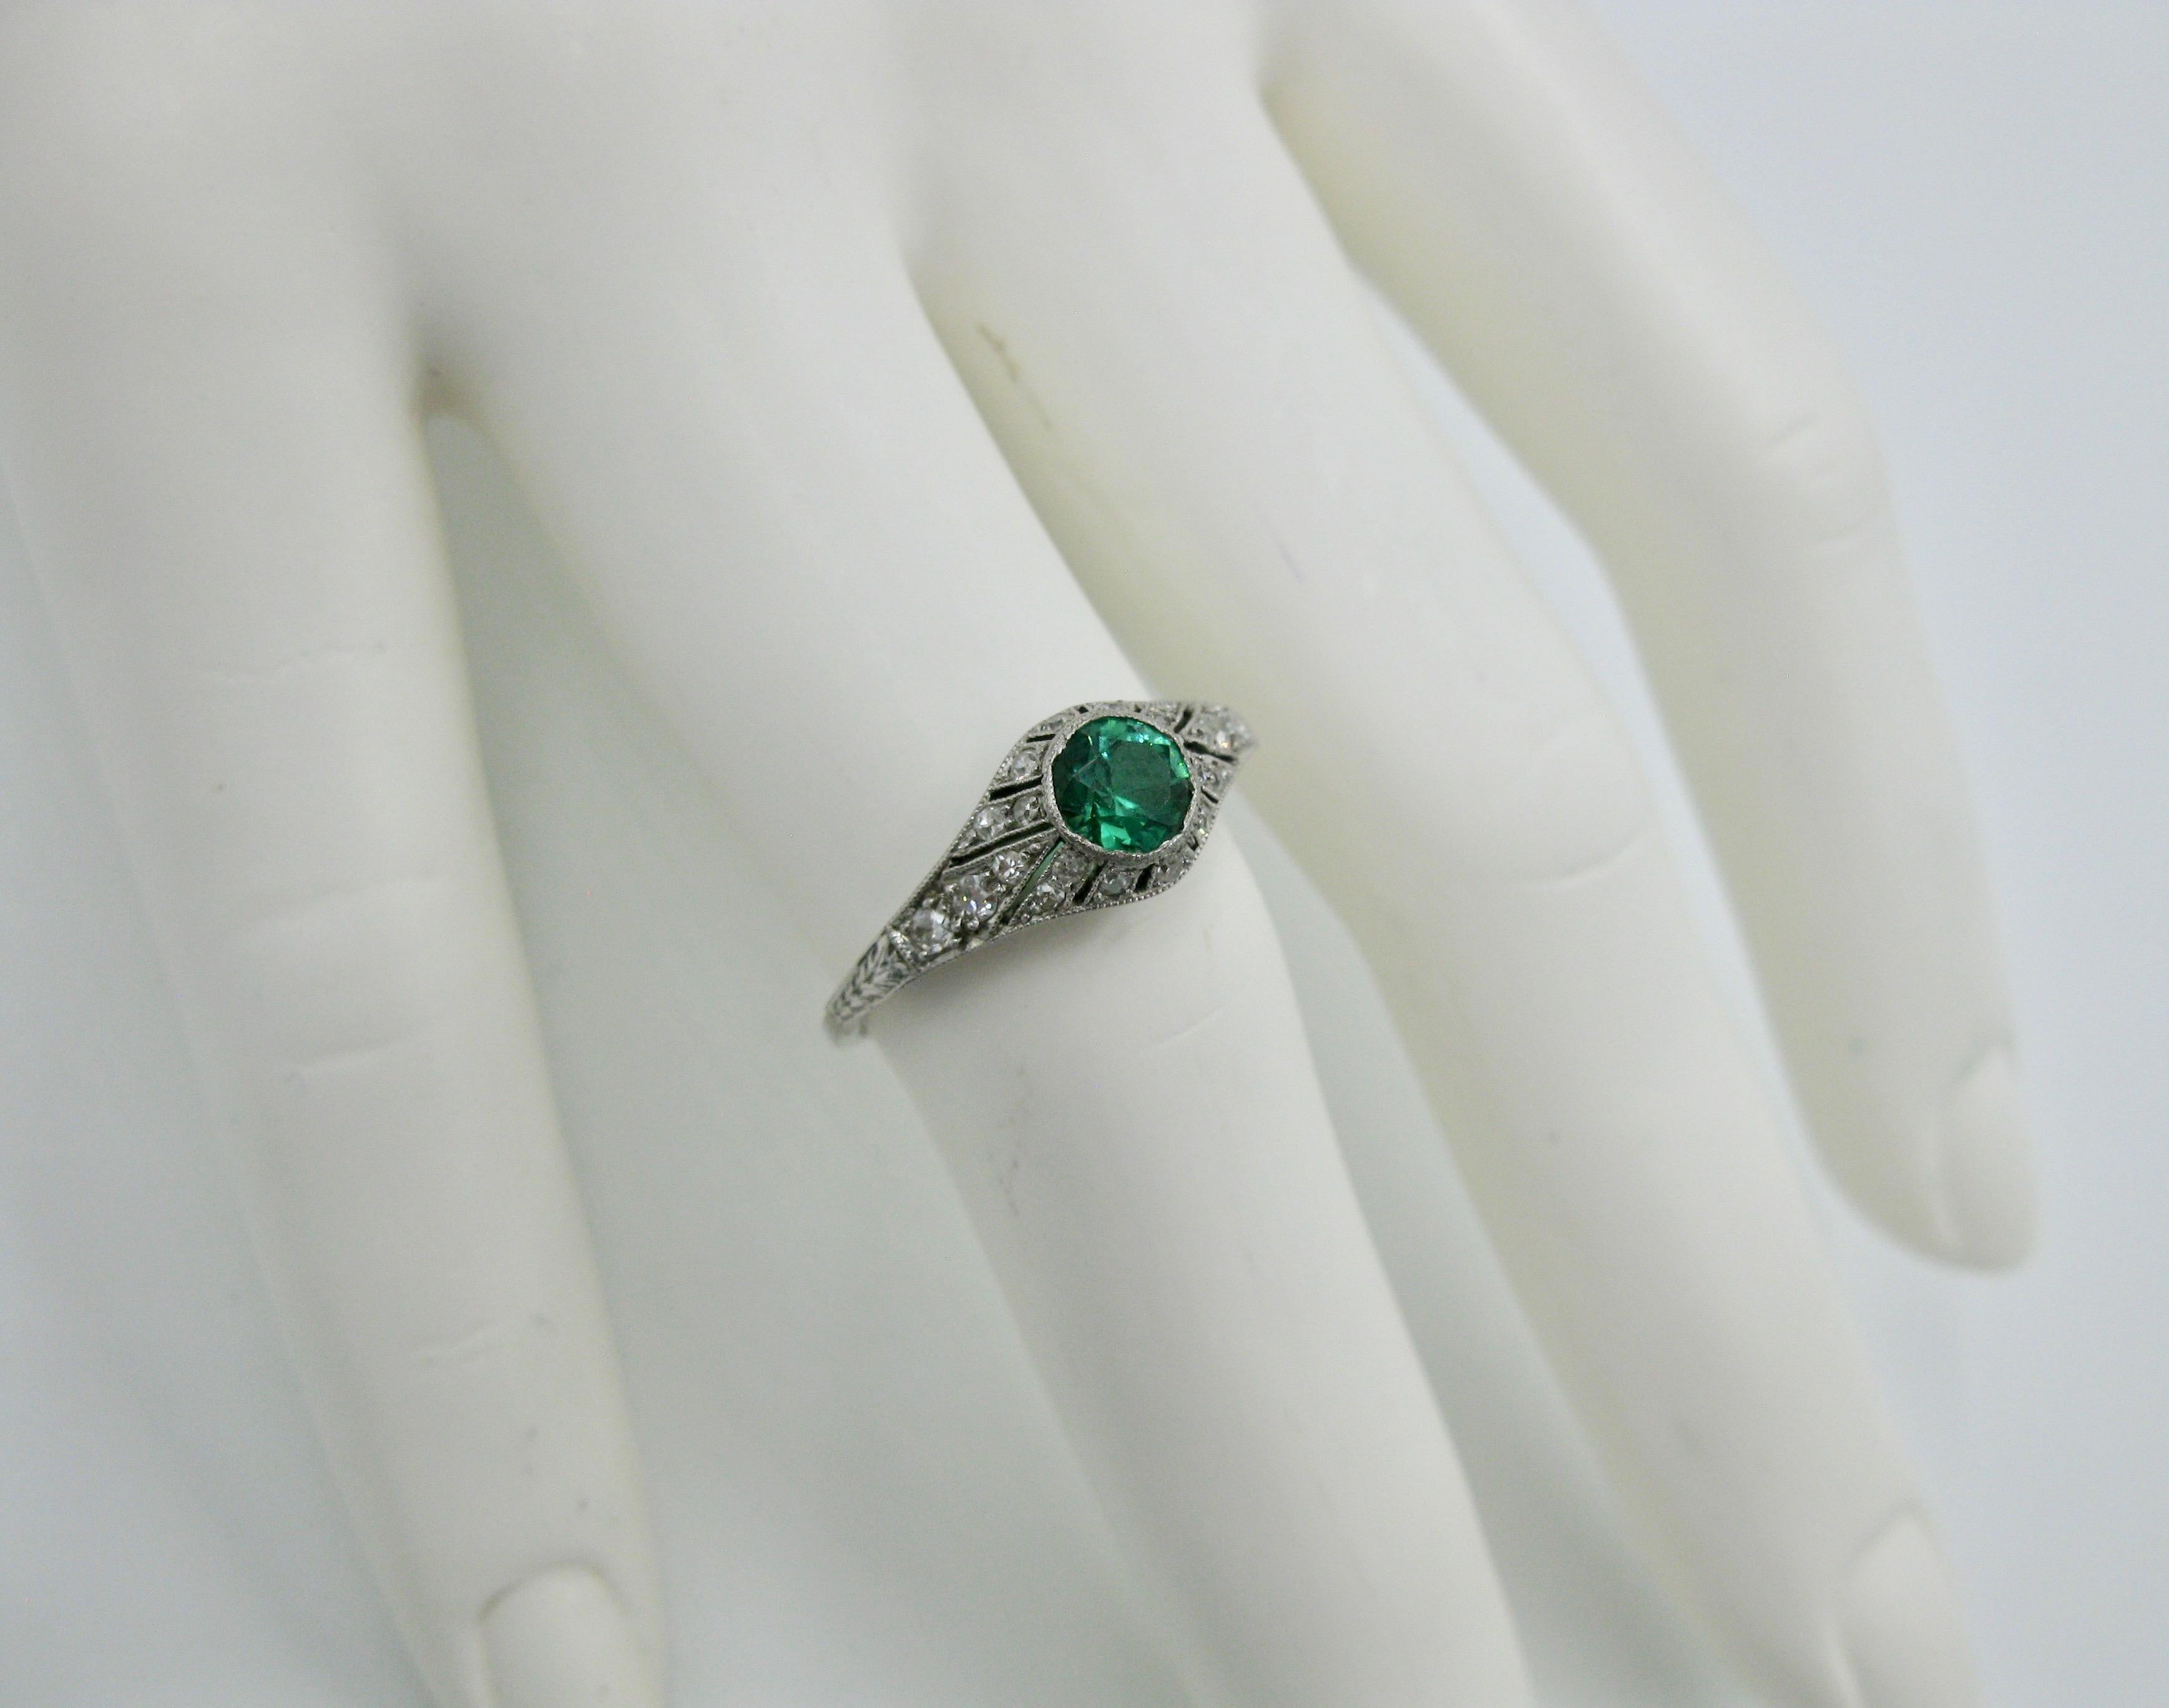 A stunning Antique Art Deco .4 Carat Green Demantoid Garnet Diamond Platinum Wedding Engagement Ring.  The central round faceted Green Garnet is a dream!  The setting is a stunning Art Deco setting in Platinum with open work and beaded milgrain